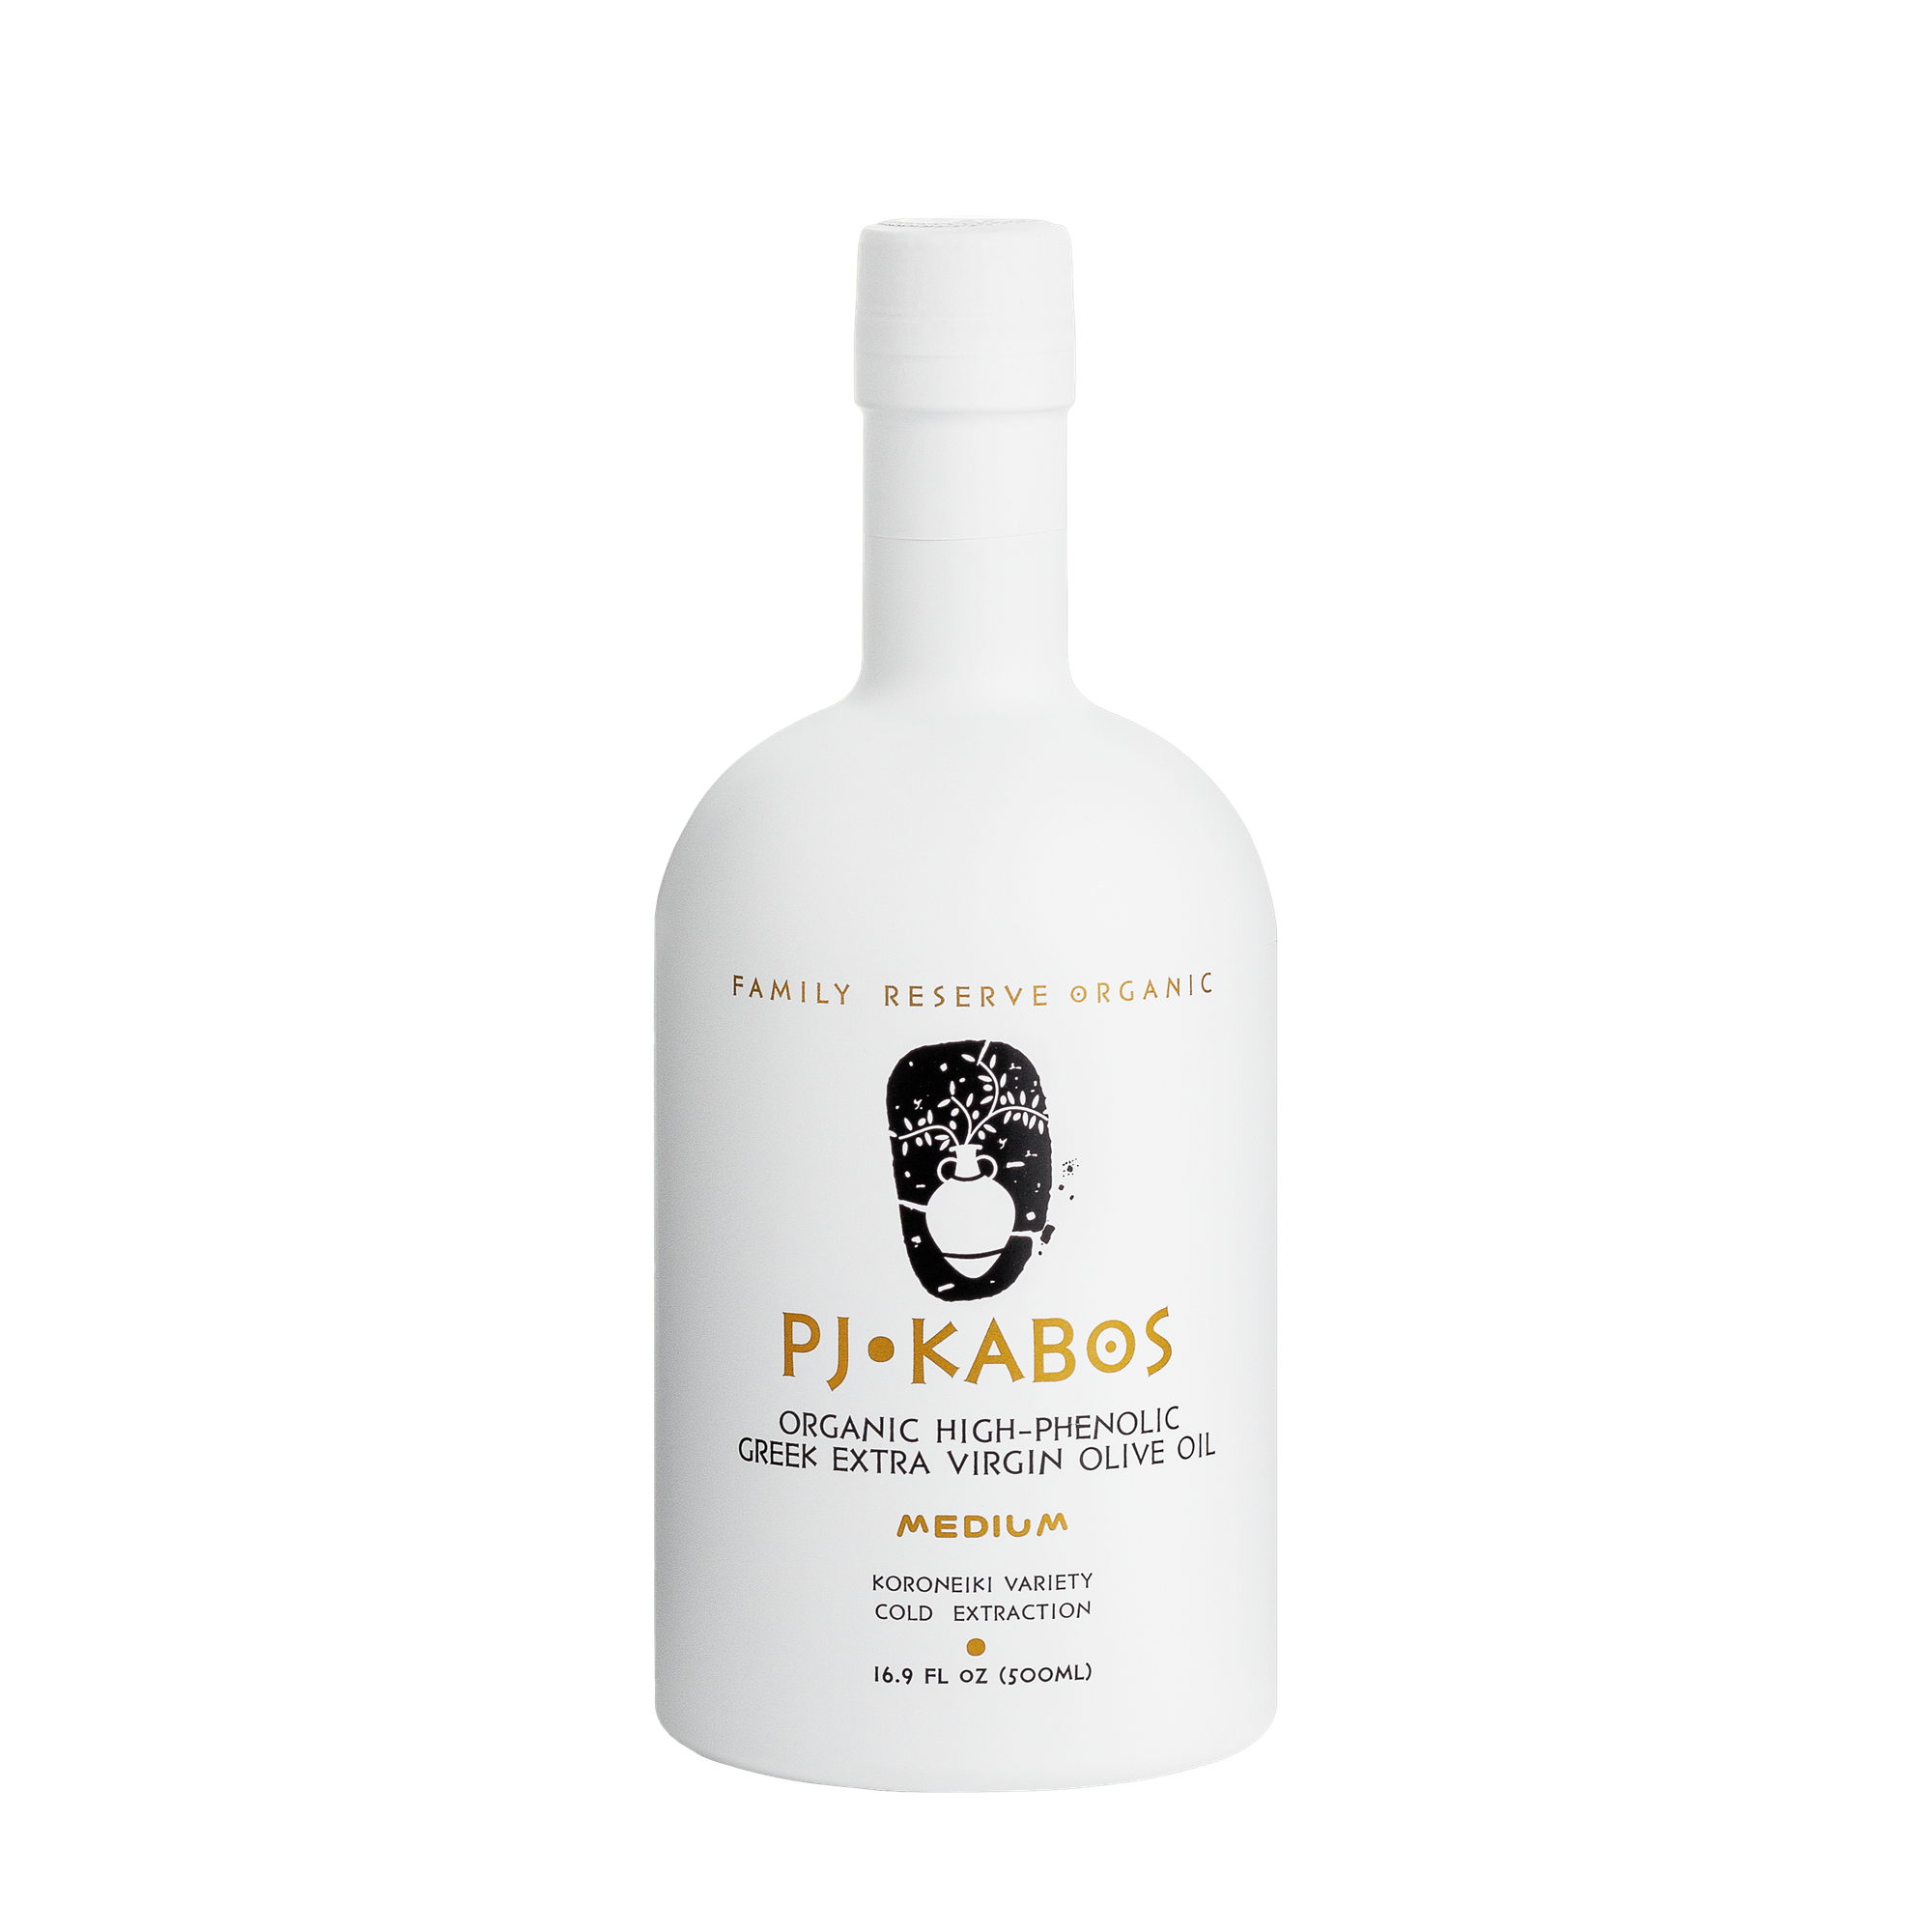 A beautiful white bottle of PJ Kabos Family Reserve Organic – Medium – High Phenolic Extra Virgin Olive Oil.